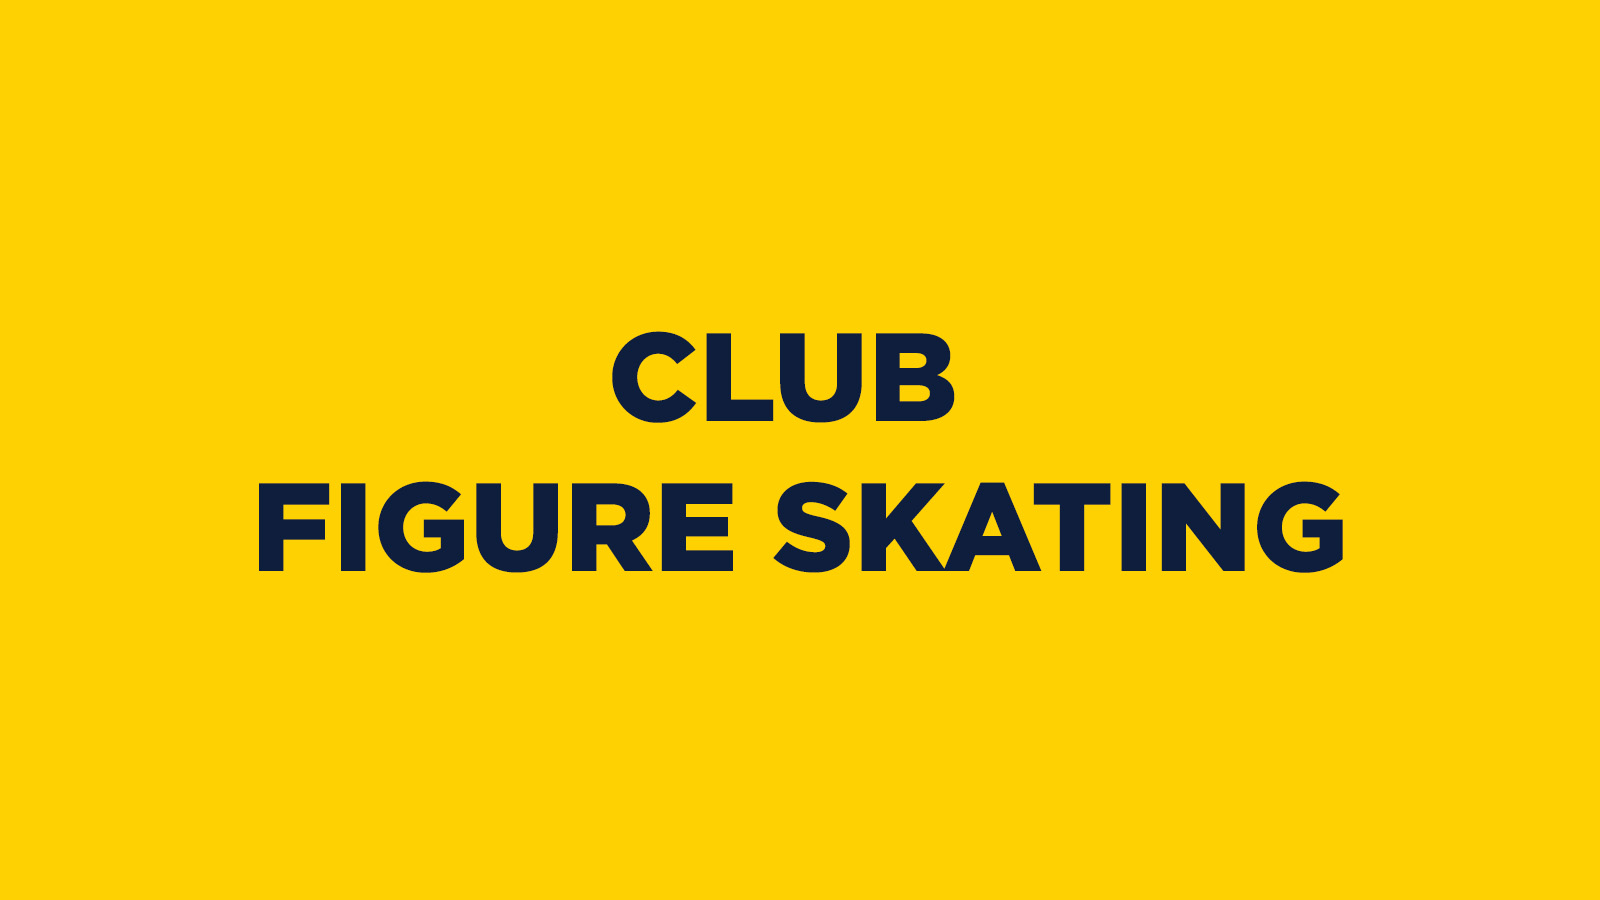 CLUB FIGURE SKATING